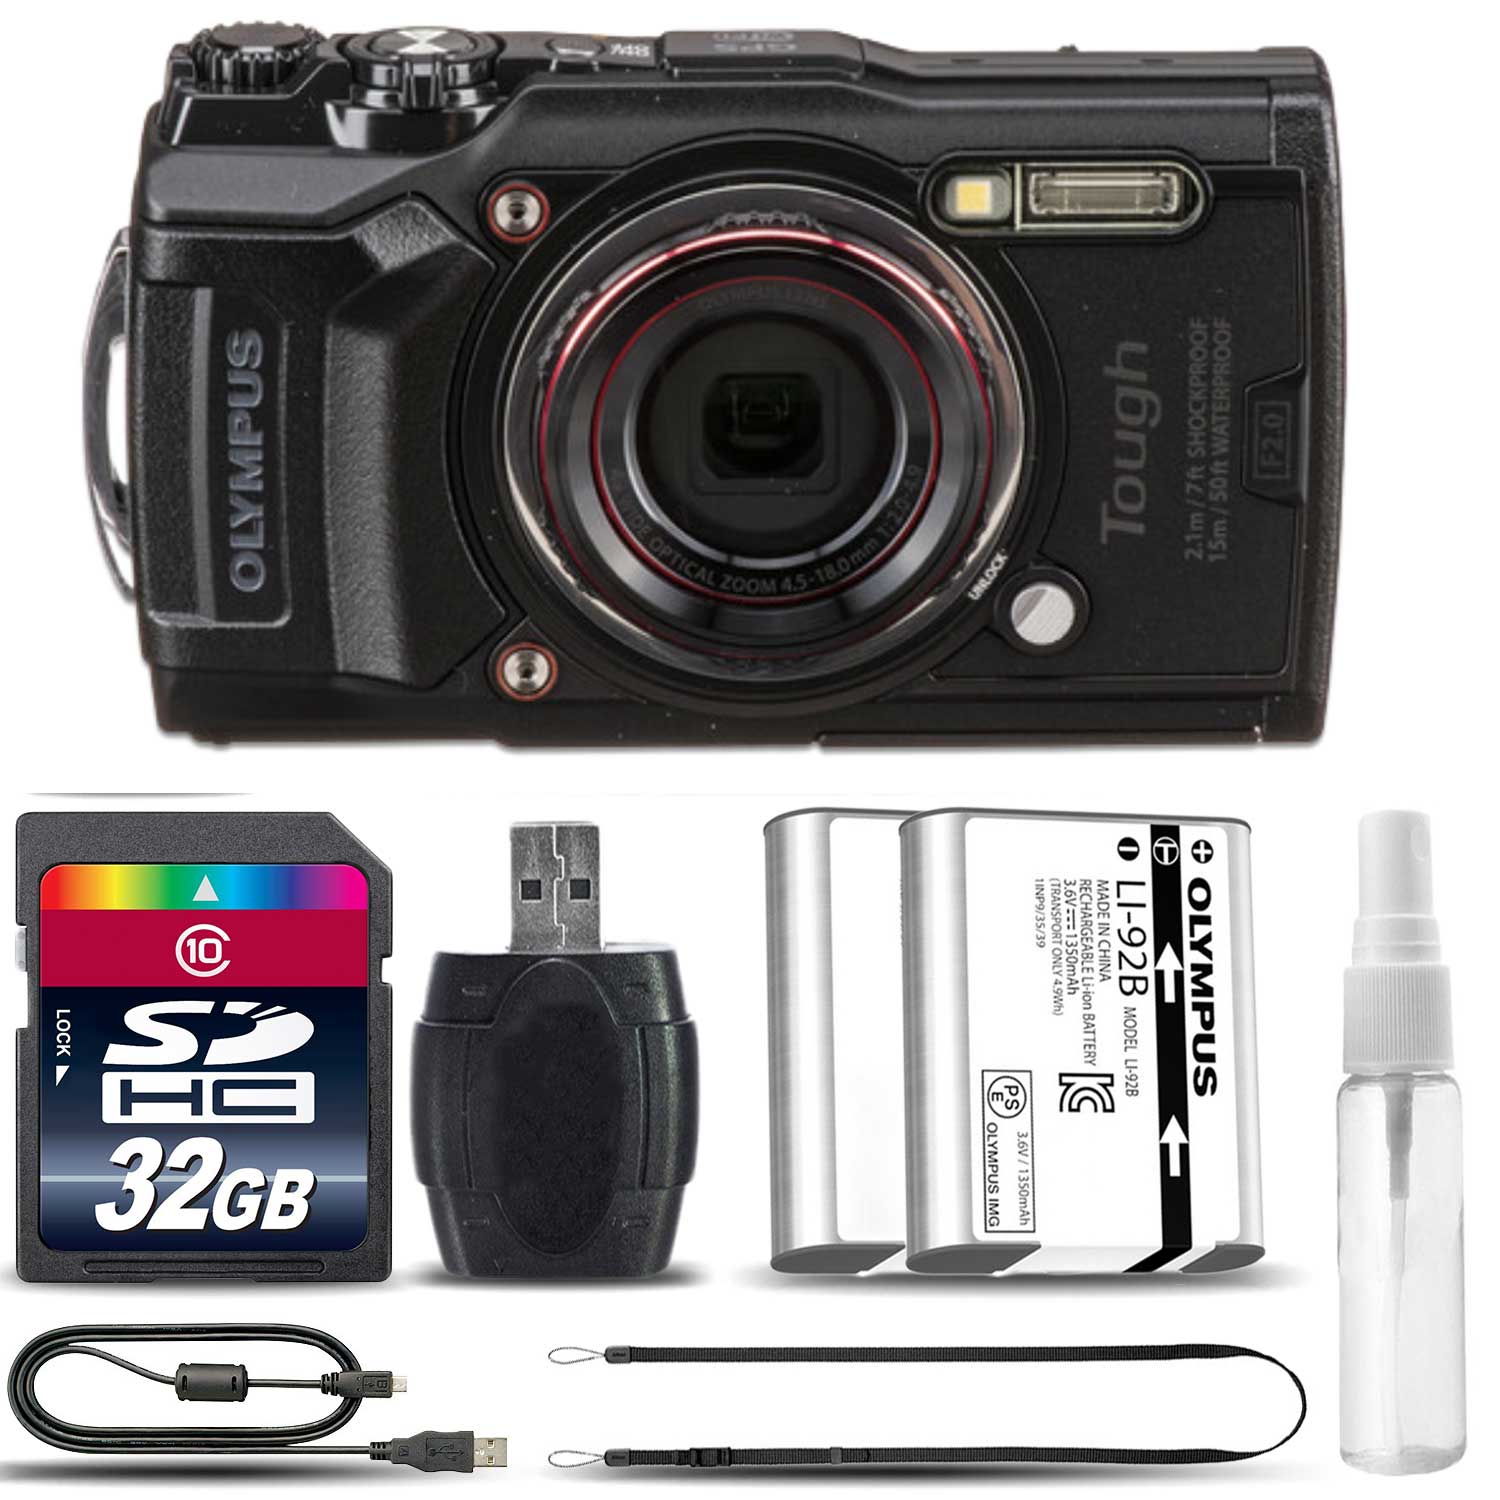 TOUGH TG-6 Digital Waterproof Camera (Black) + Extra Battery - 32GB Kit *FREE SHIPPING*